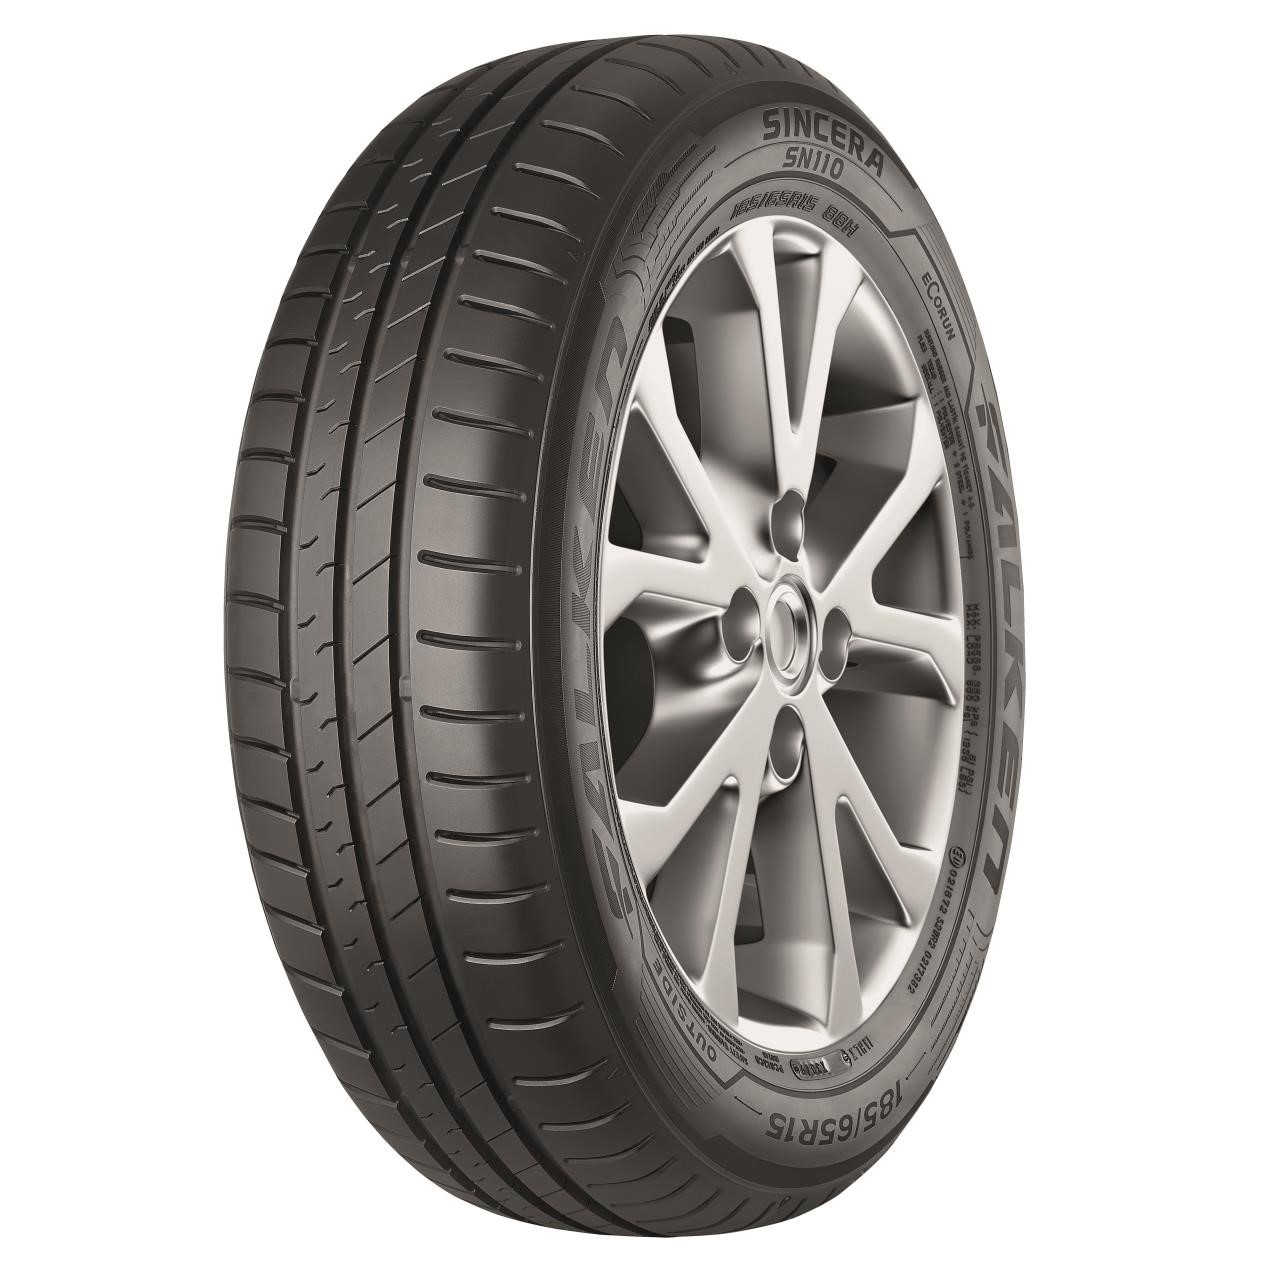 Falken Sincera SN110 Ecorun - Tire Reviews and Tests